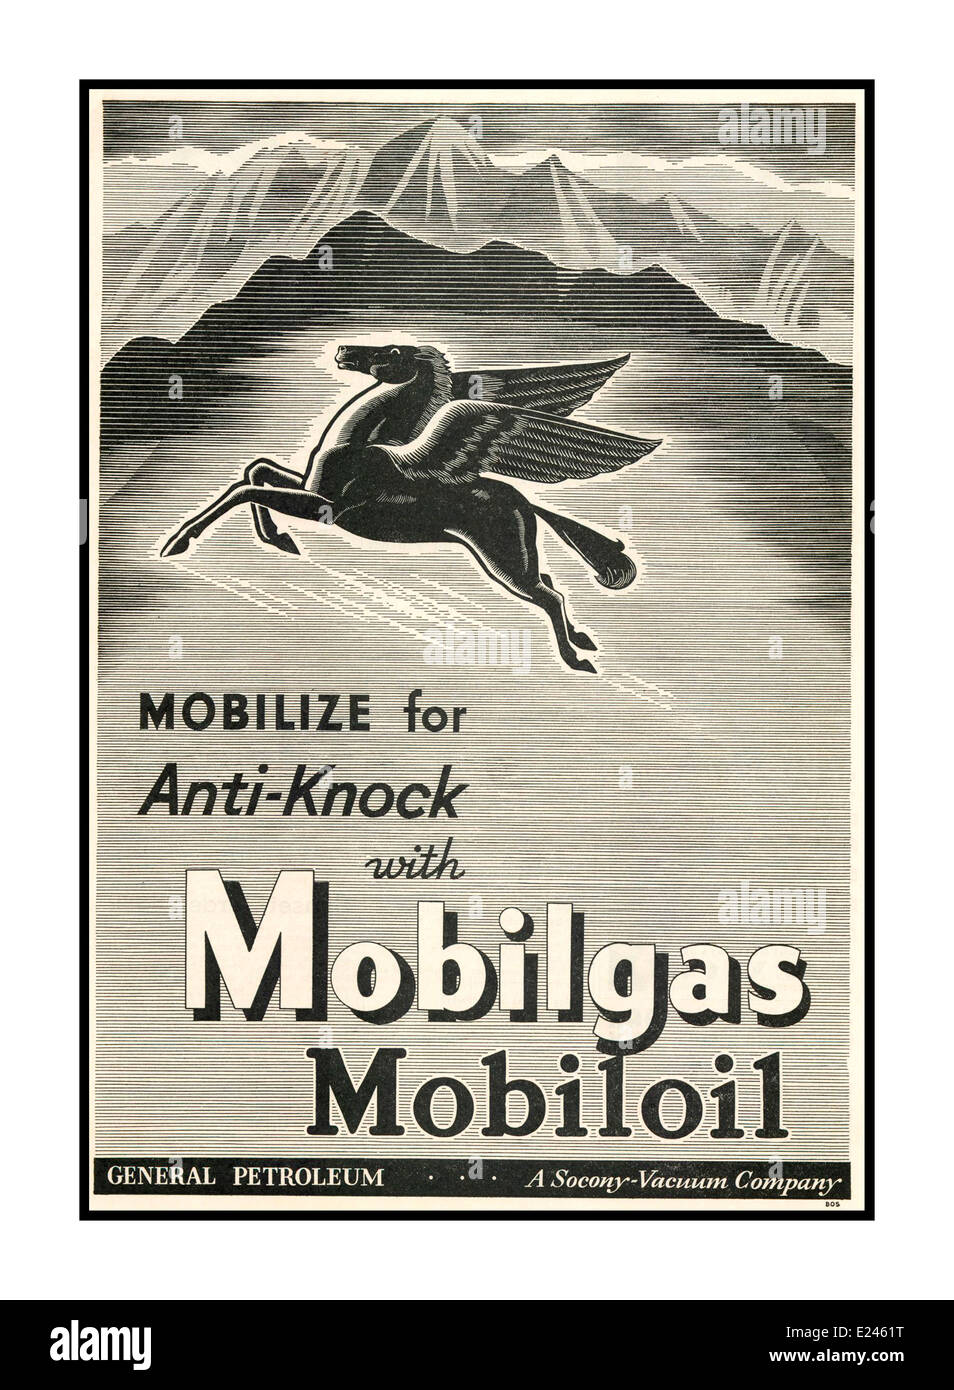 1935 press advertisement for Mobilgas Mobiloil general petroleum Stock Photo